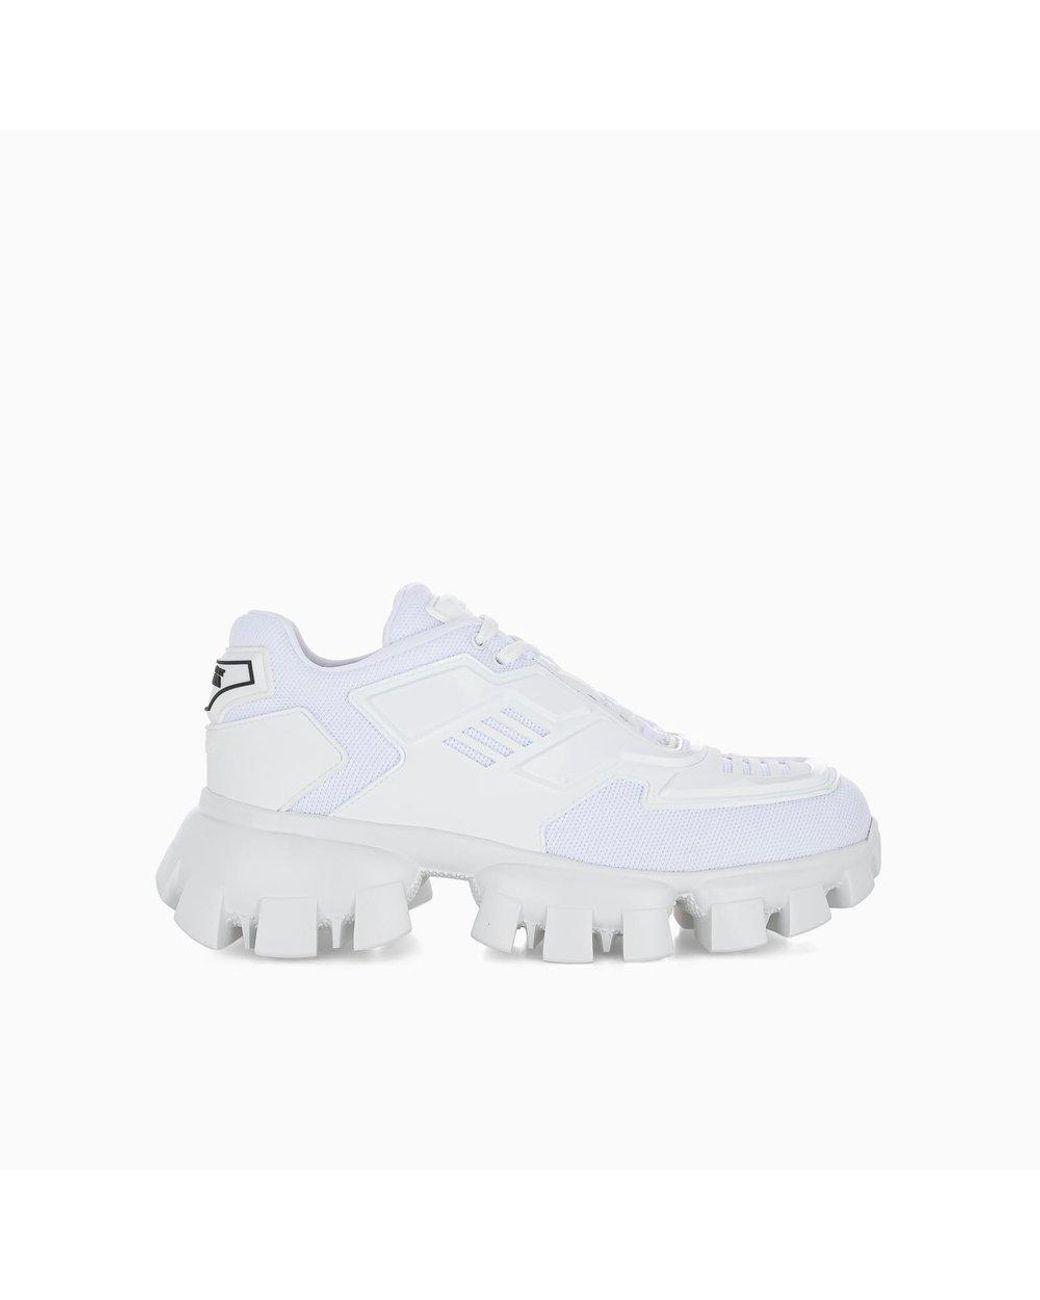 Prada Cloudbust Thunder Sneakers in White | Lyst